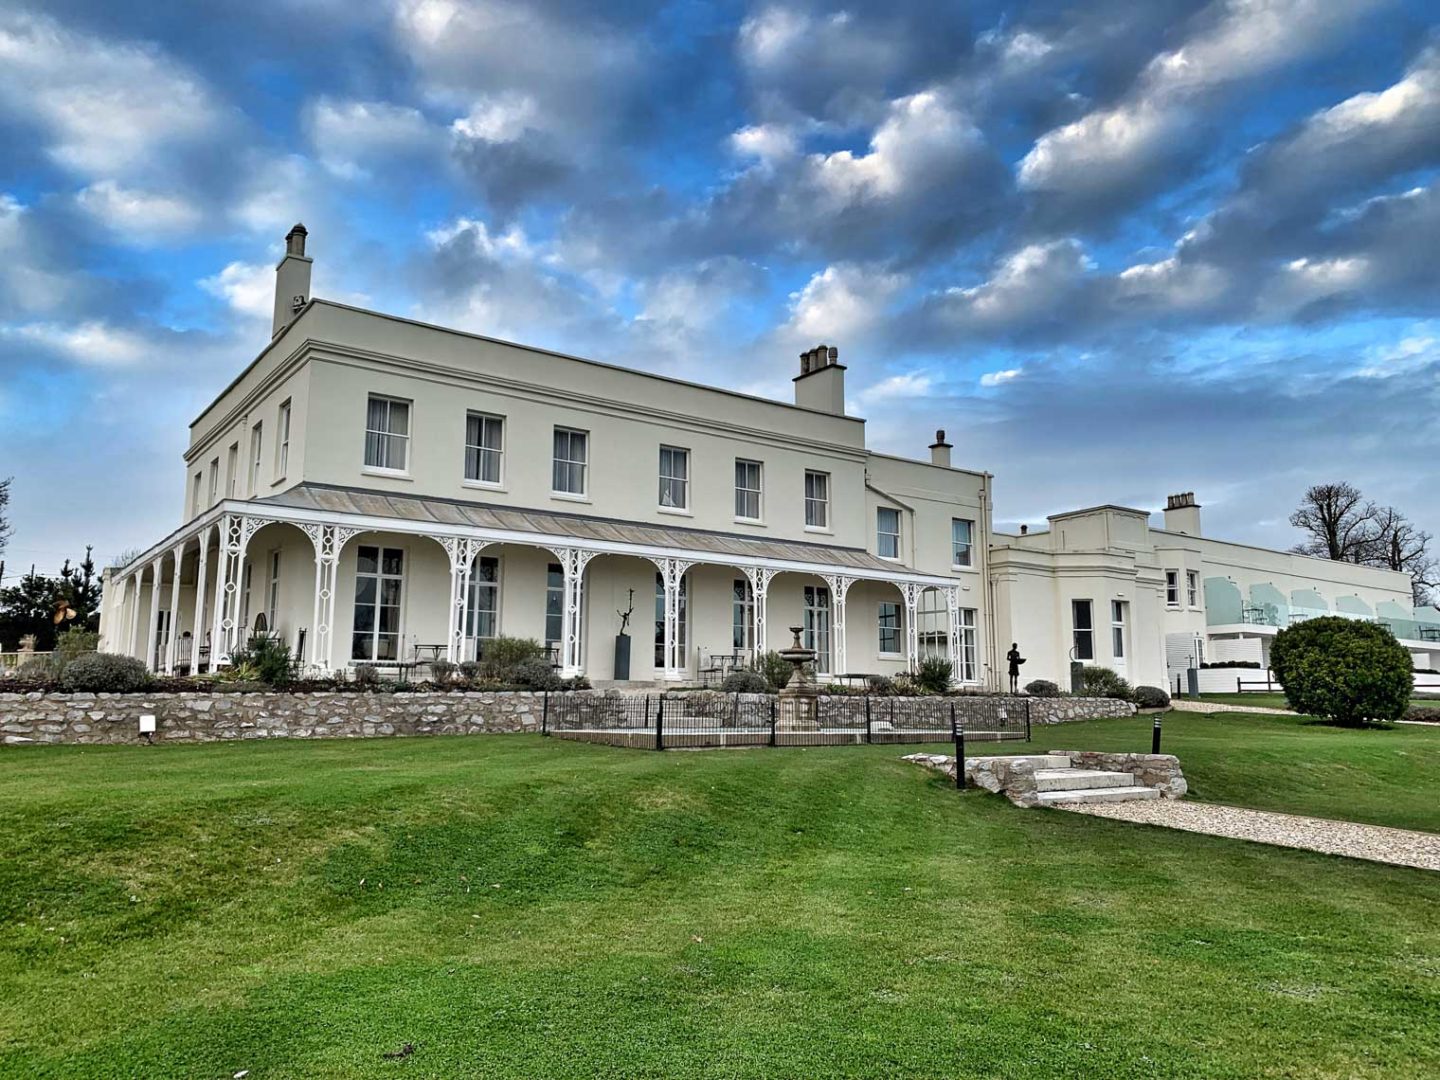 Hotel review: Lympstone Manor hotel in Devon